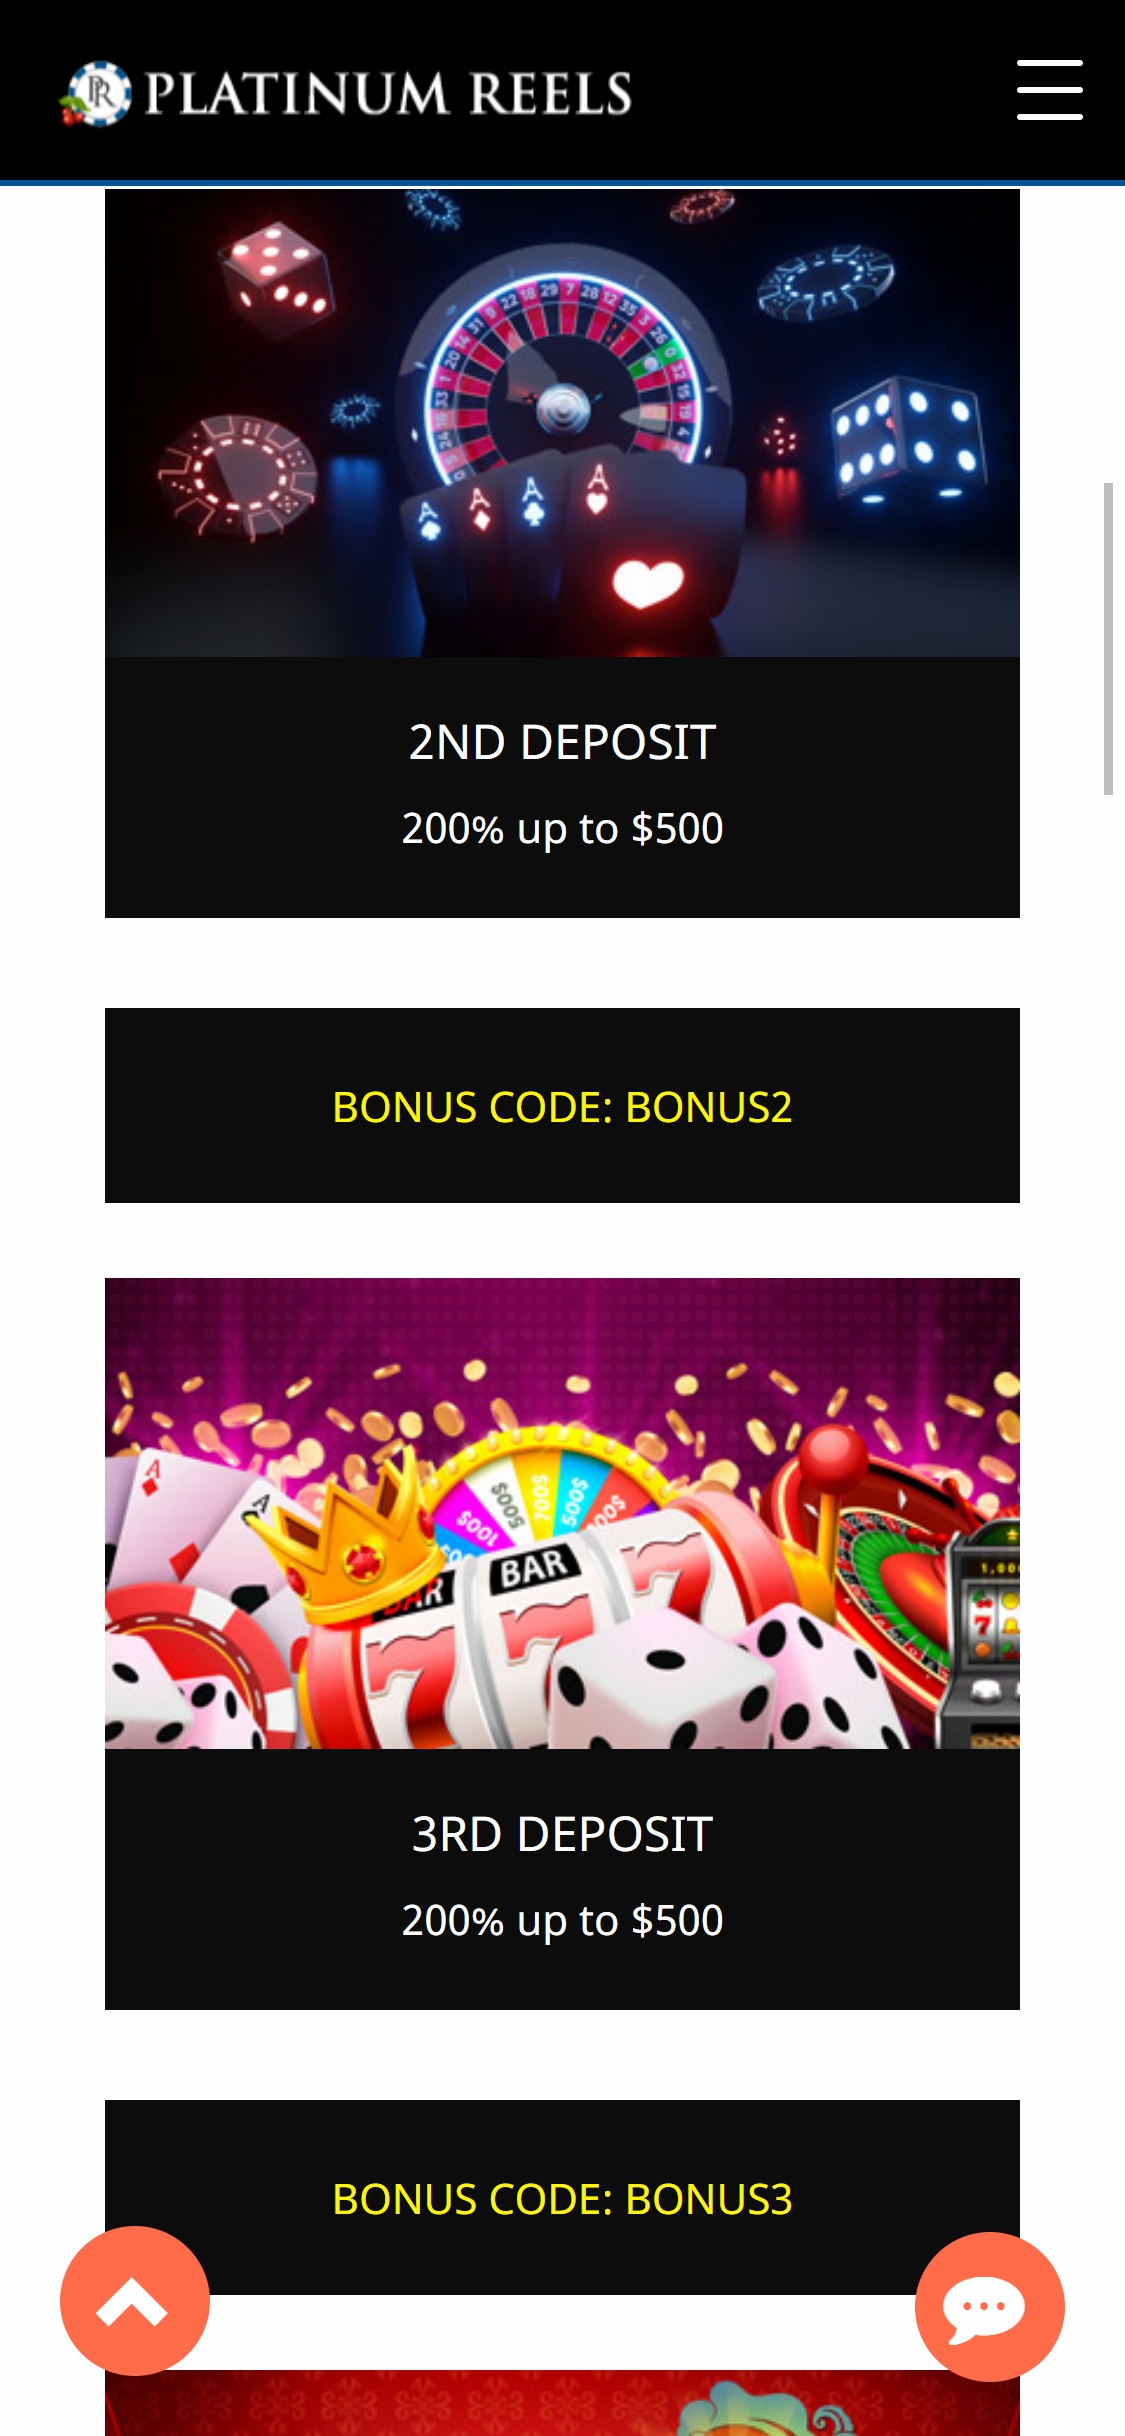 Platinum Reels Casino Mobile No Deposit Bonus Review